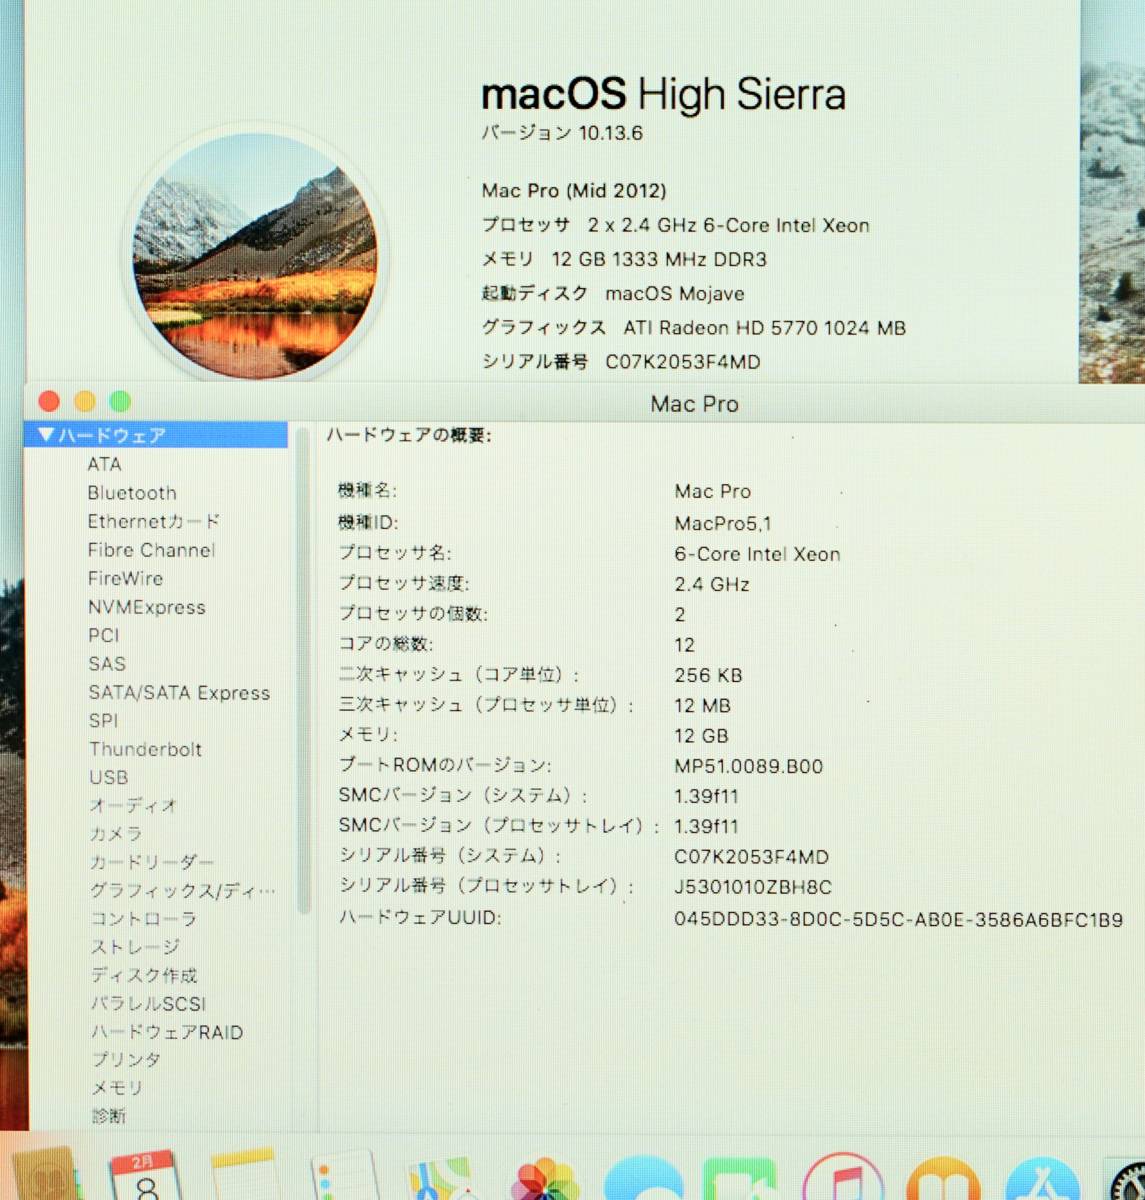 。Apple純正 Mid2012MacPro用 CPU 2.4GHz x2＜12コア・24スレッド/ターボブースト時2.67GHz＞＋12GB ECCメモリーのセット 動作確認済みです_macOS HighSierra